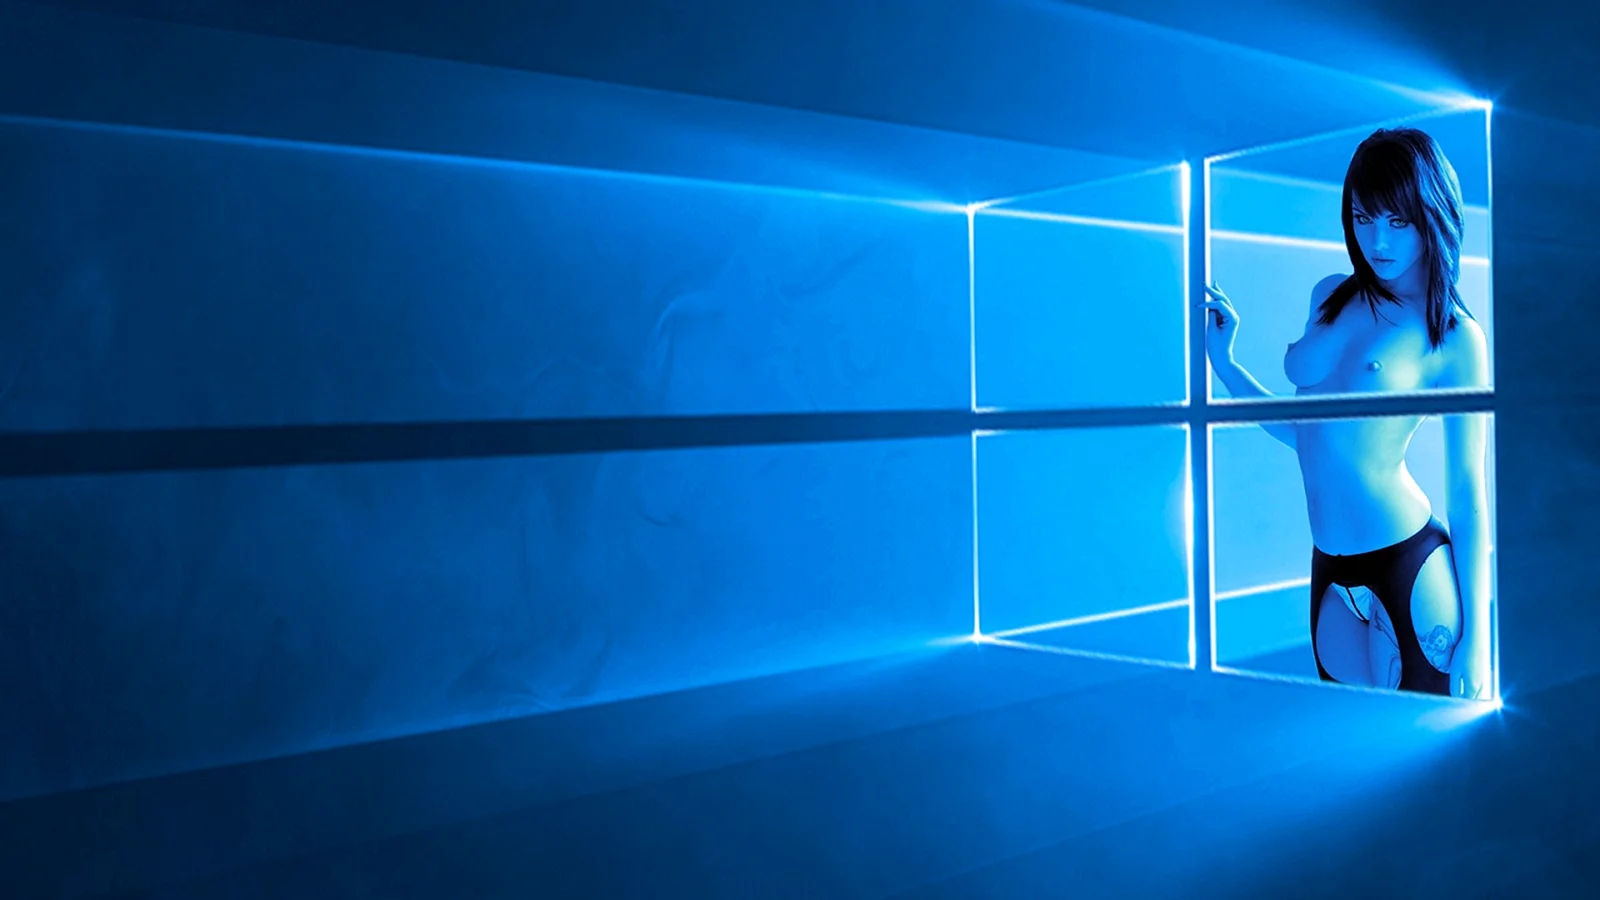 Windows 10 4K Wallpaper